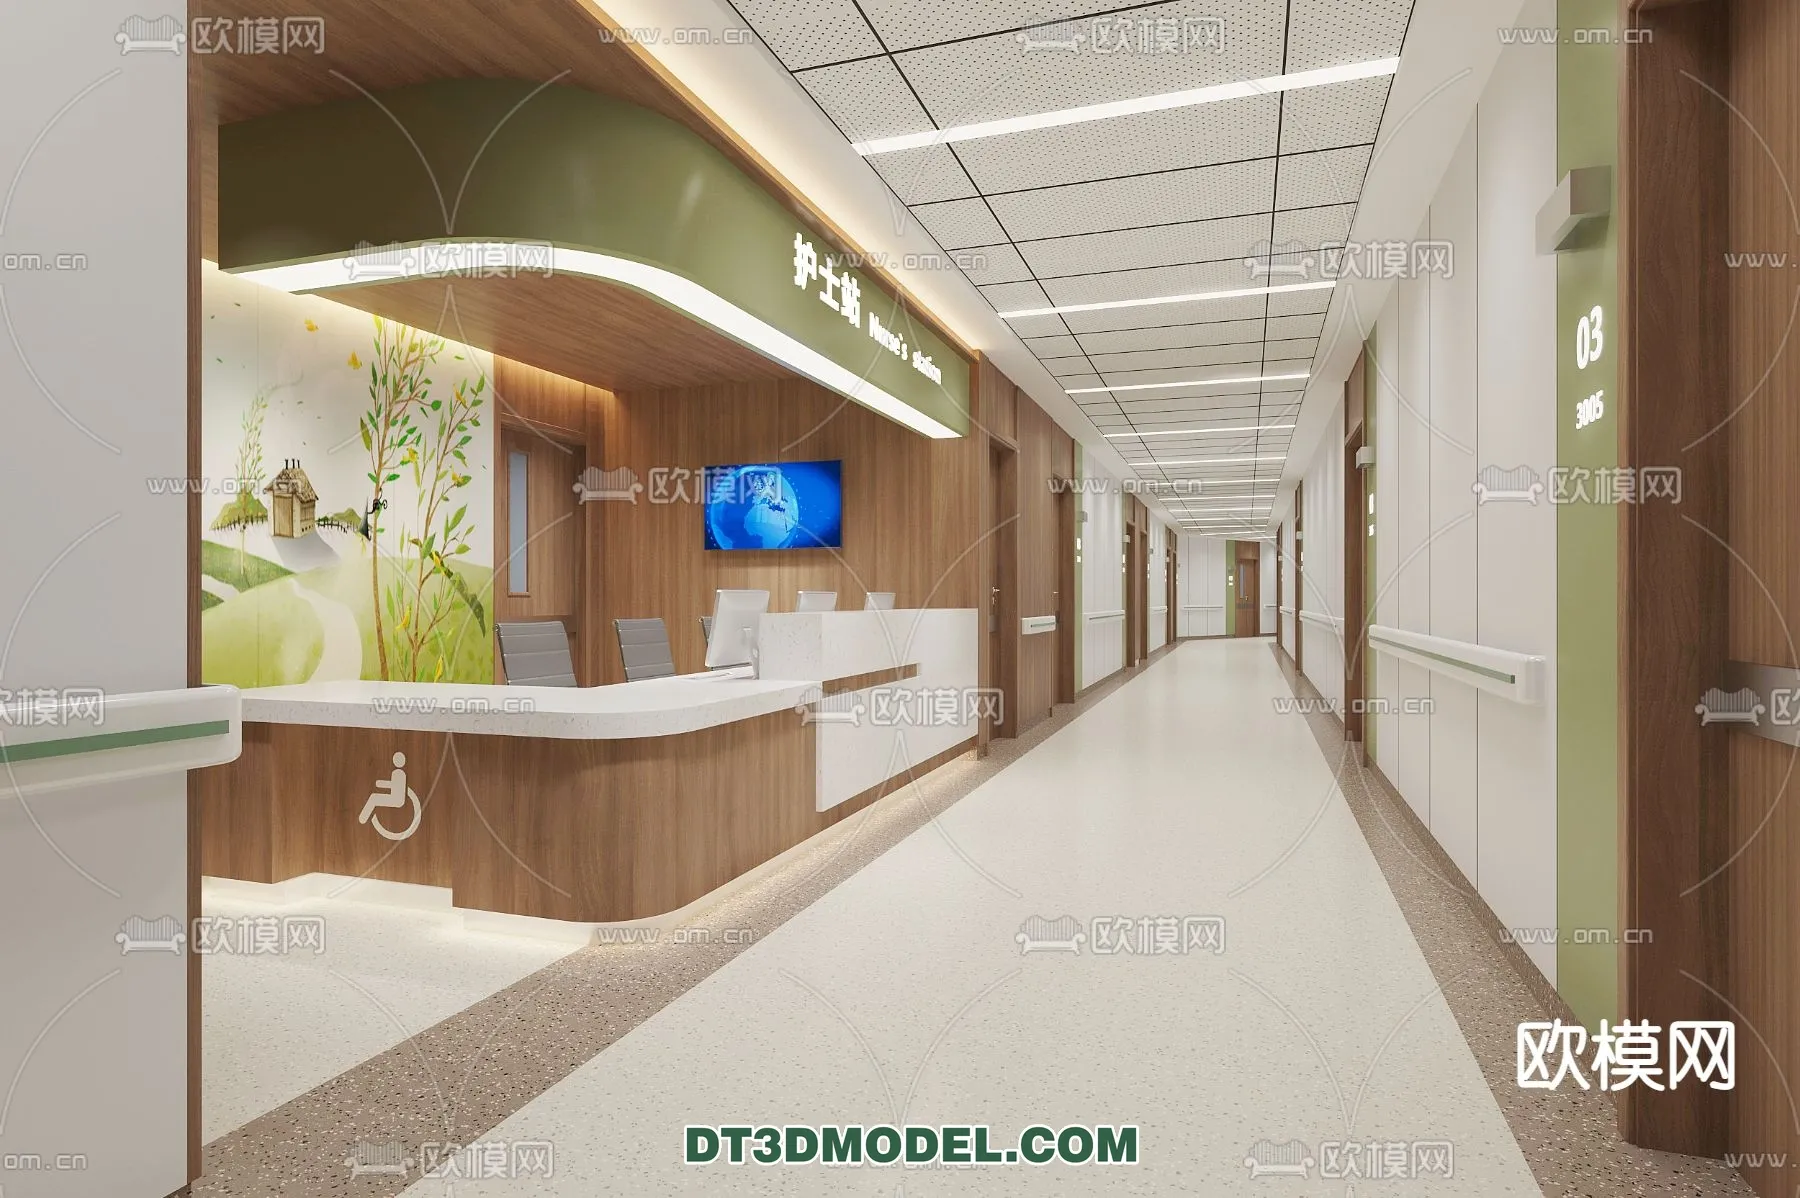 HOSPITAL 3D SCENES – MODERN – 0068